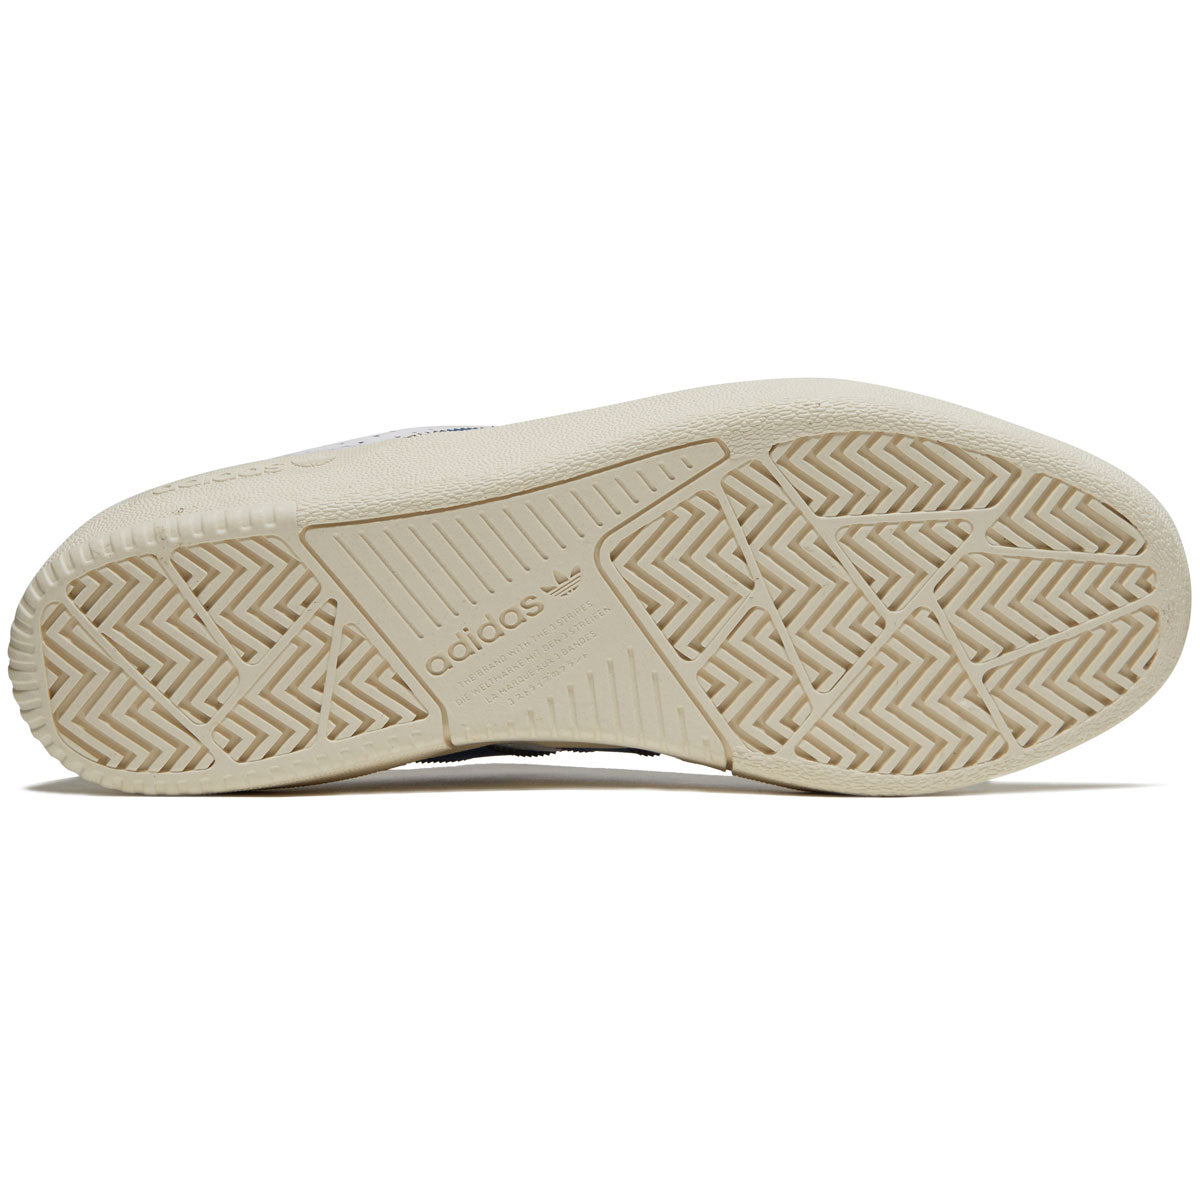 Adidas Tyshawn Low Shoes - White/Royal Blue/Chalk White image 4